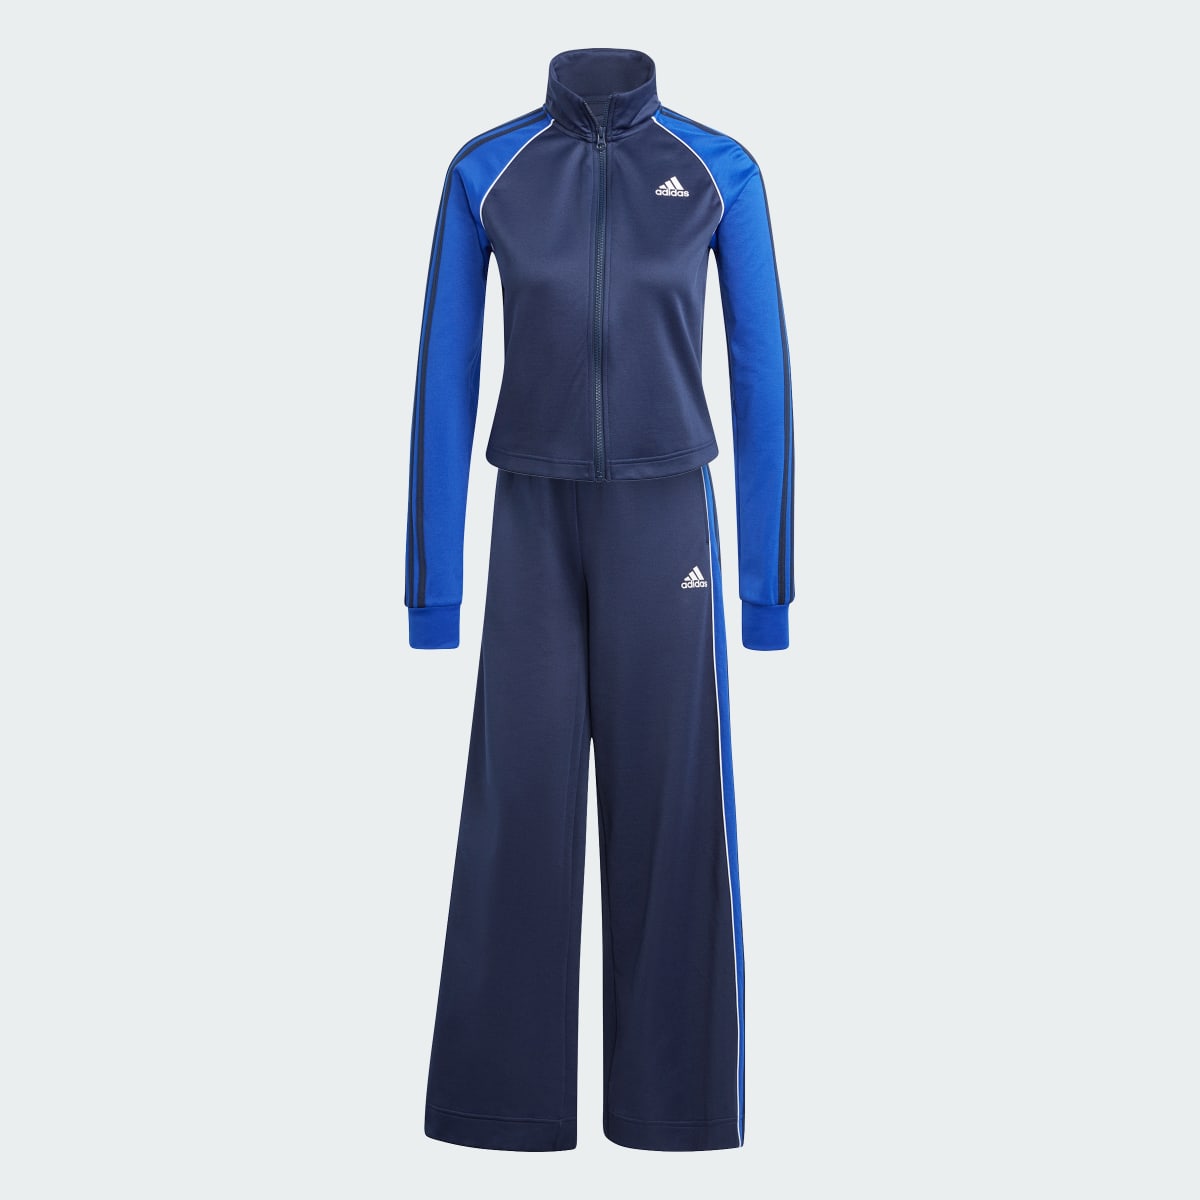 Adidas Teamsport Track Suit. 5